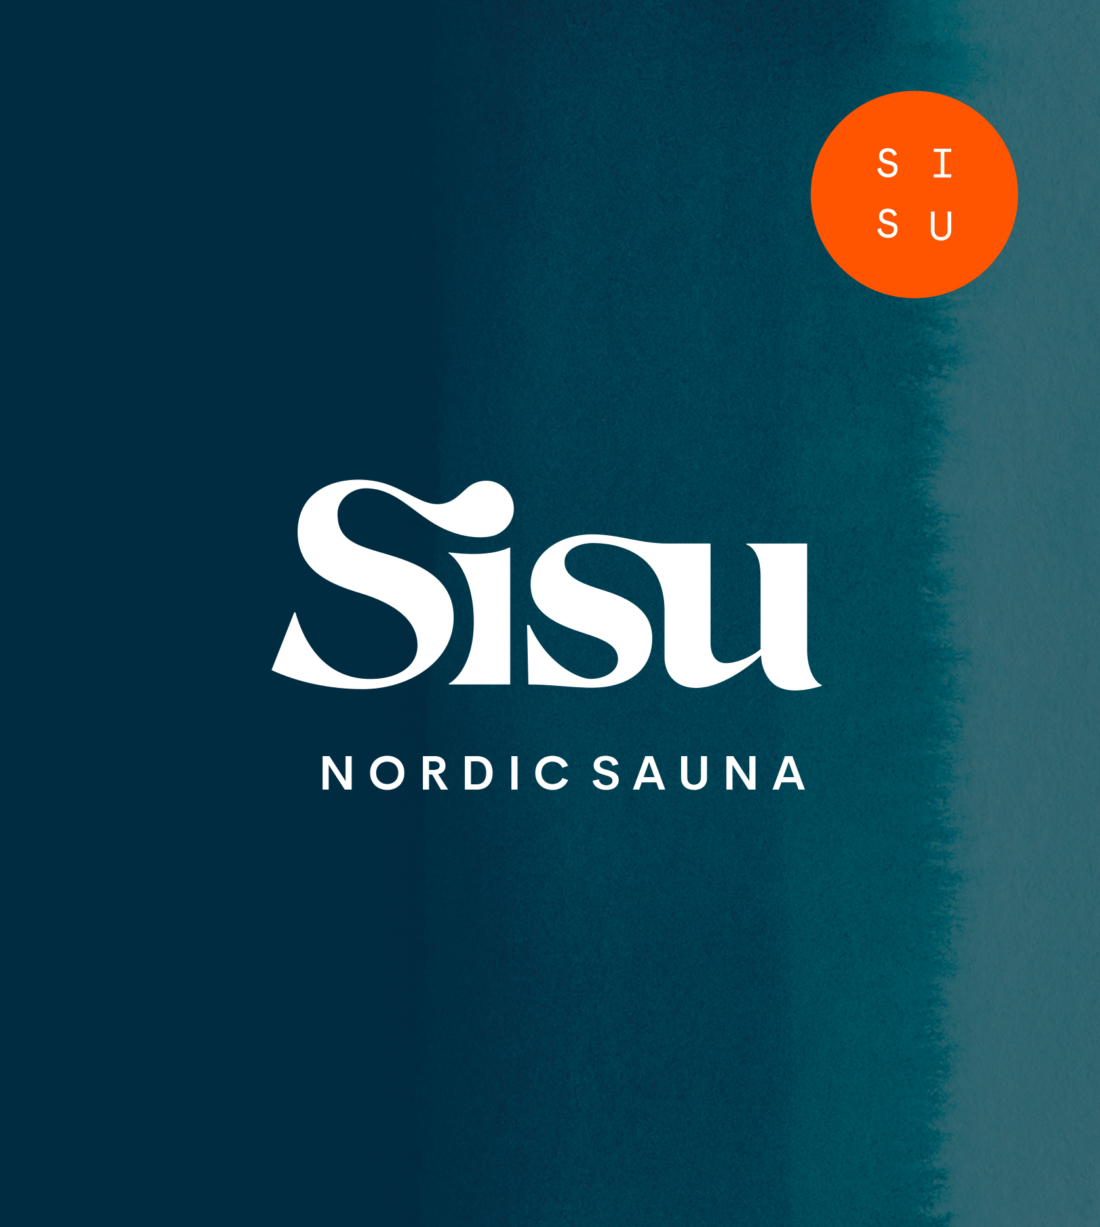 Sisu Nordic Sauna